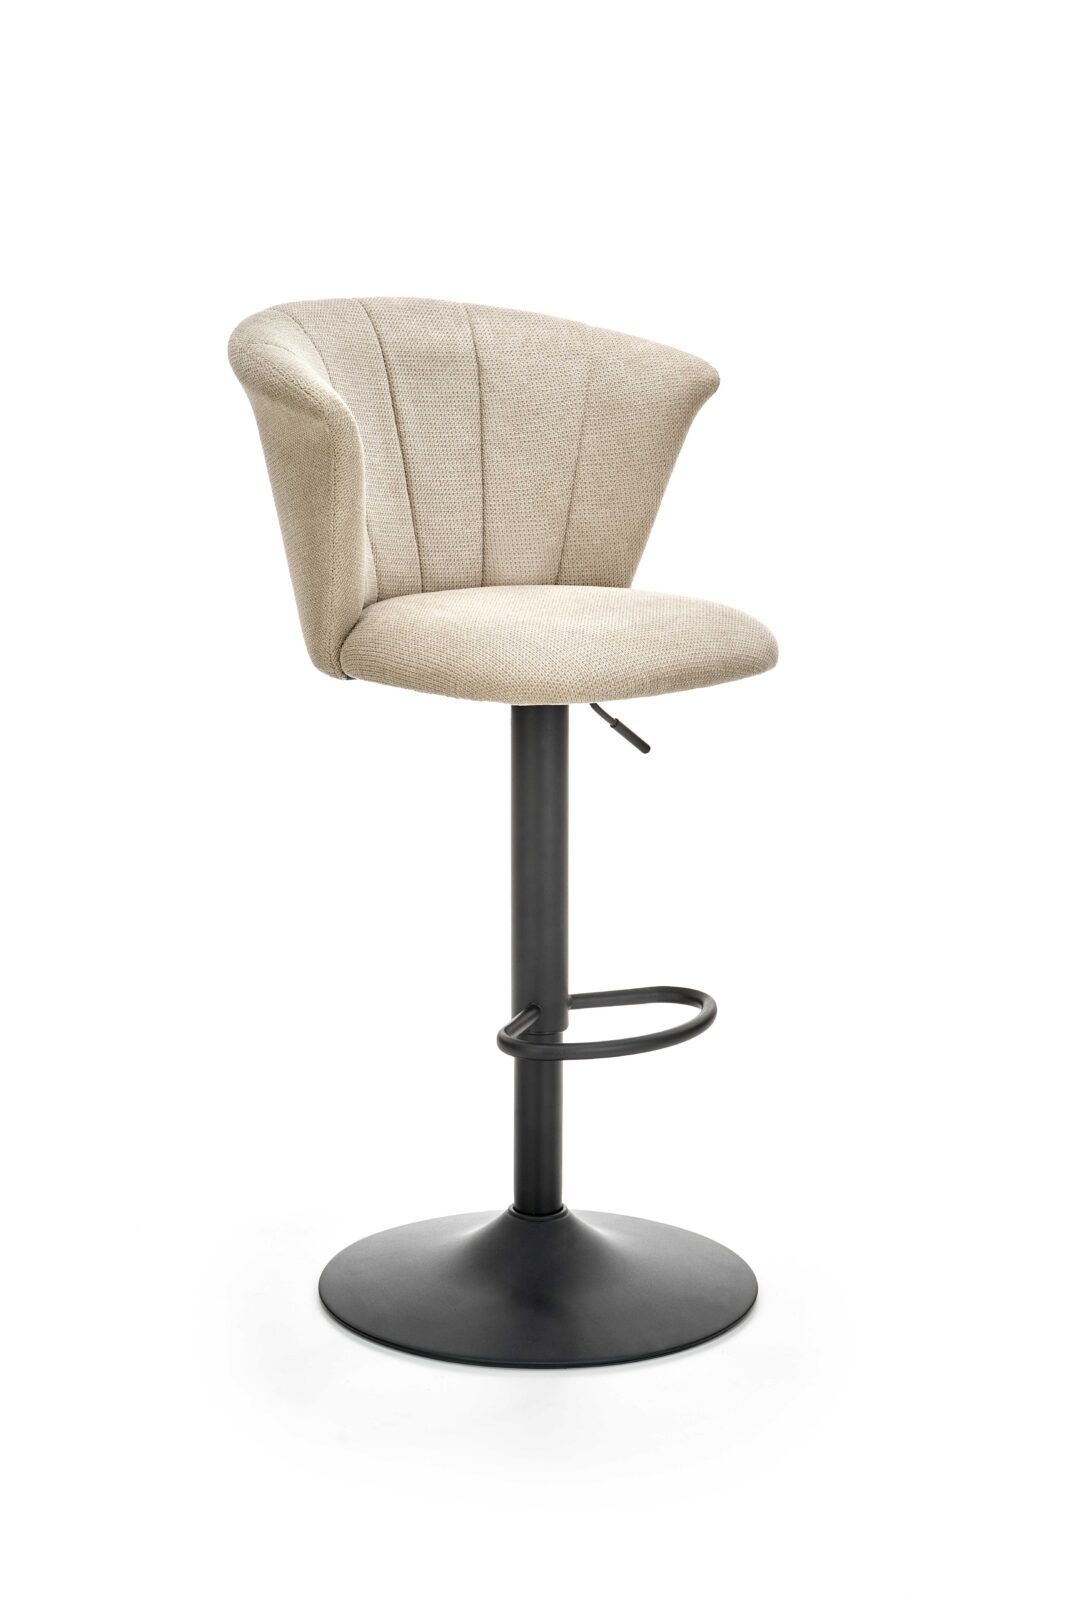 H104 bar stool